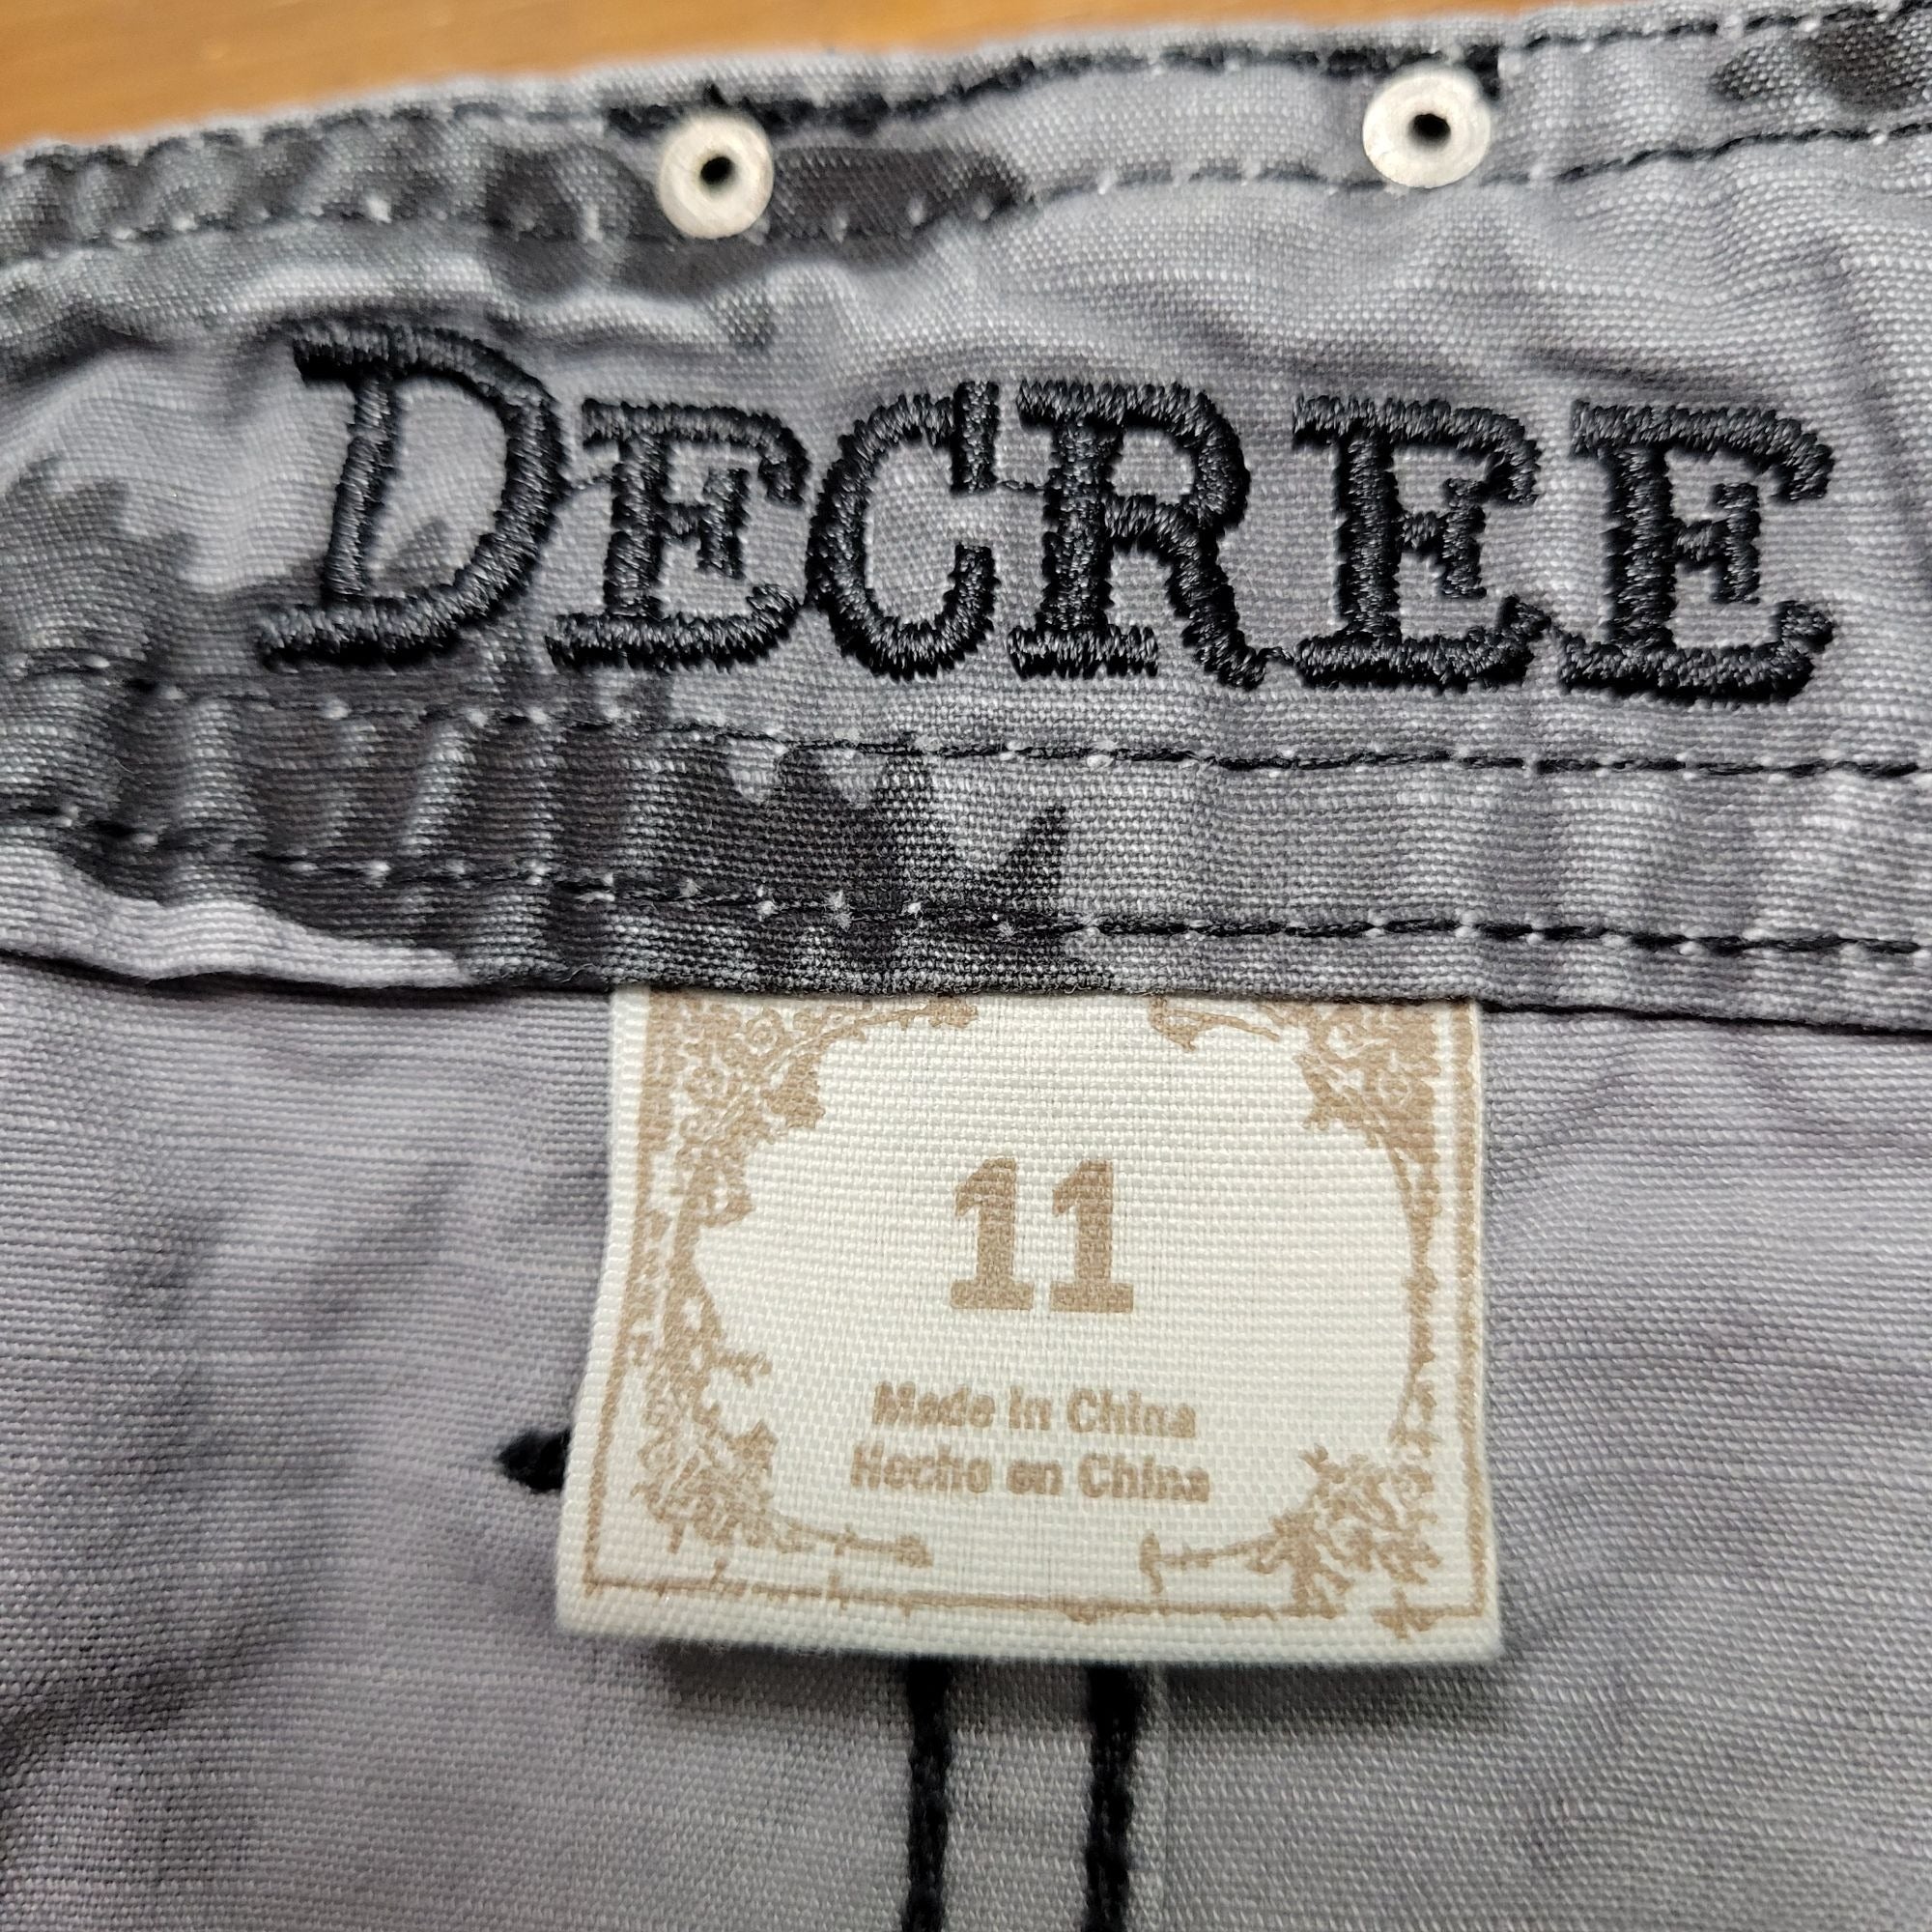 Decree Gray and Black Camouflage Mini Skirt, Size 11